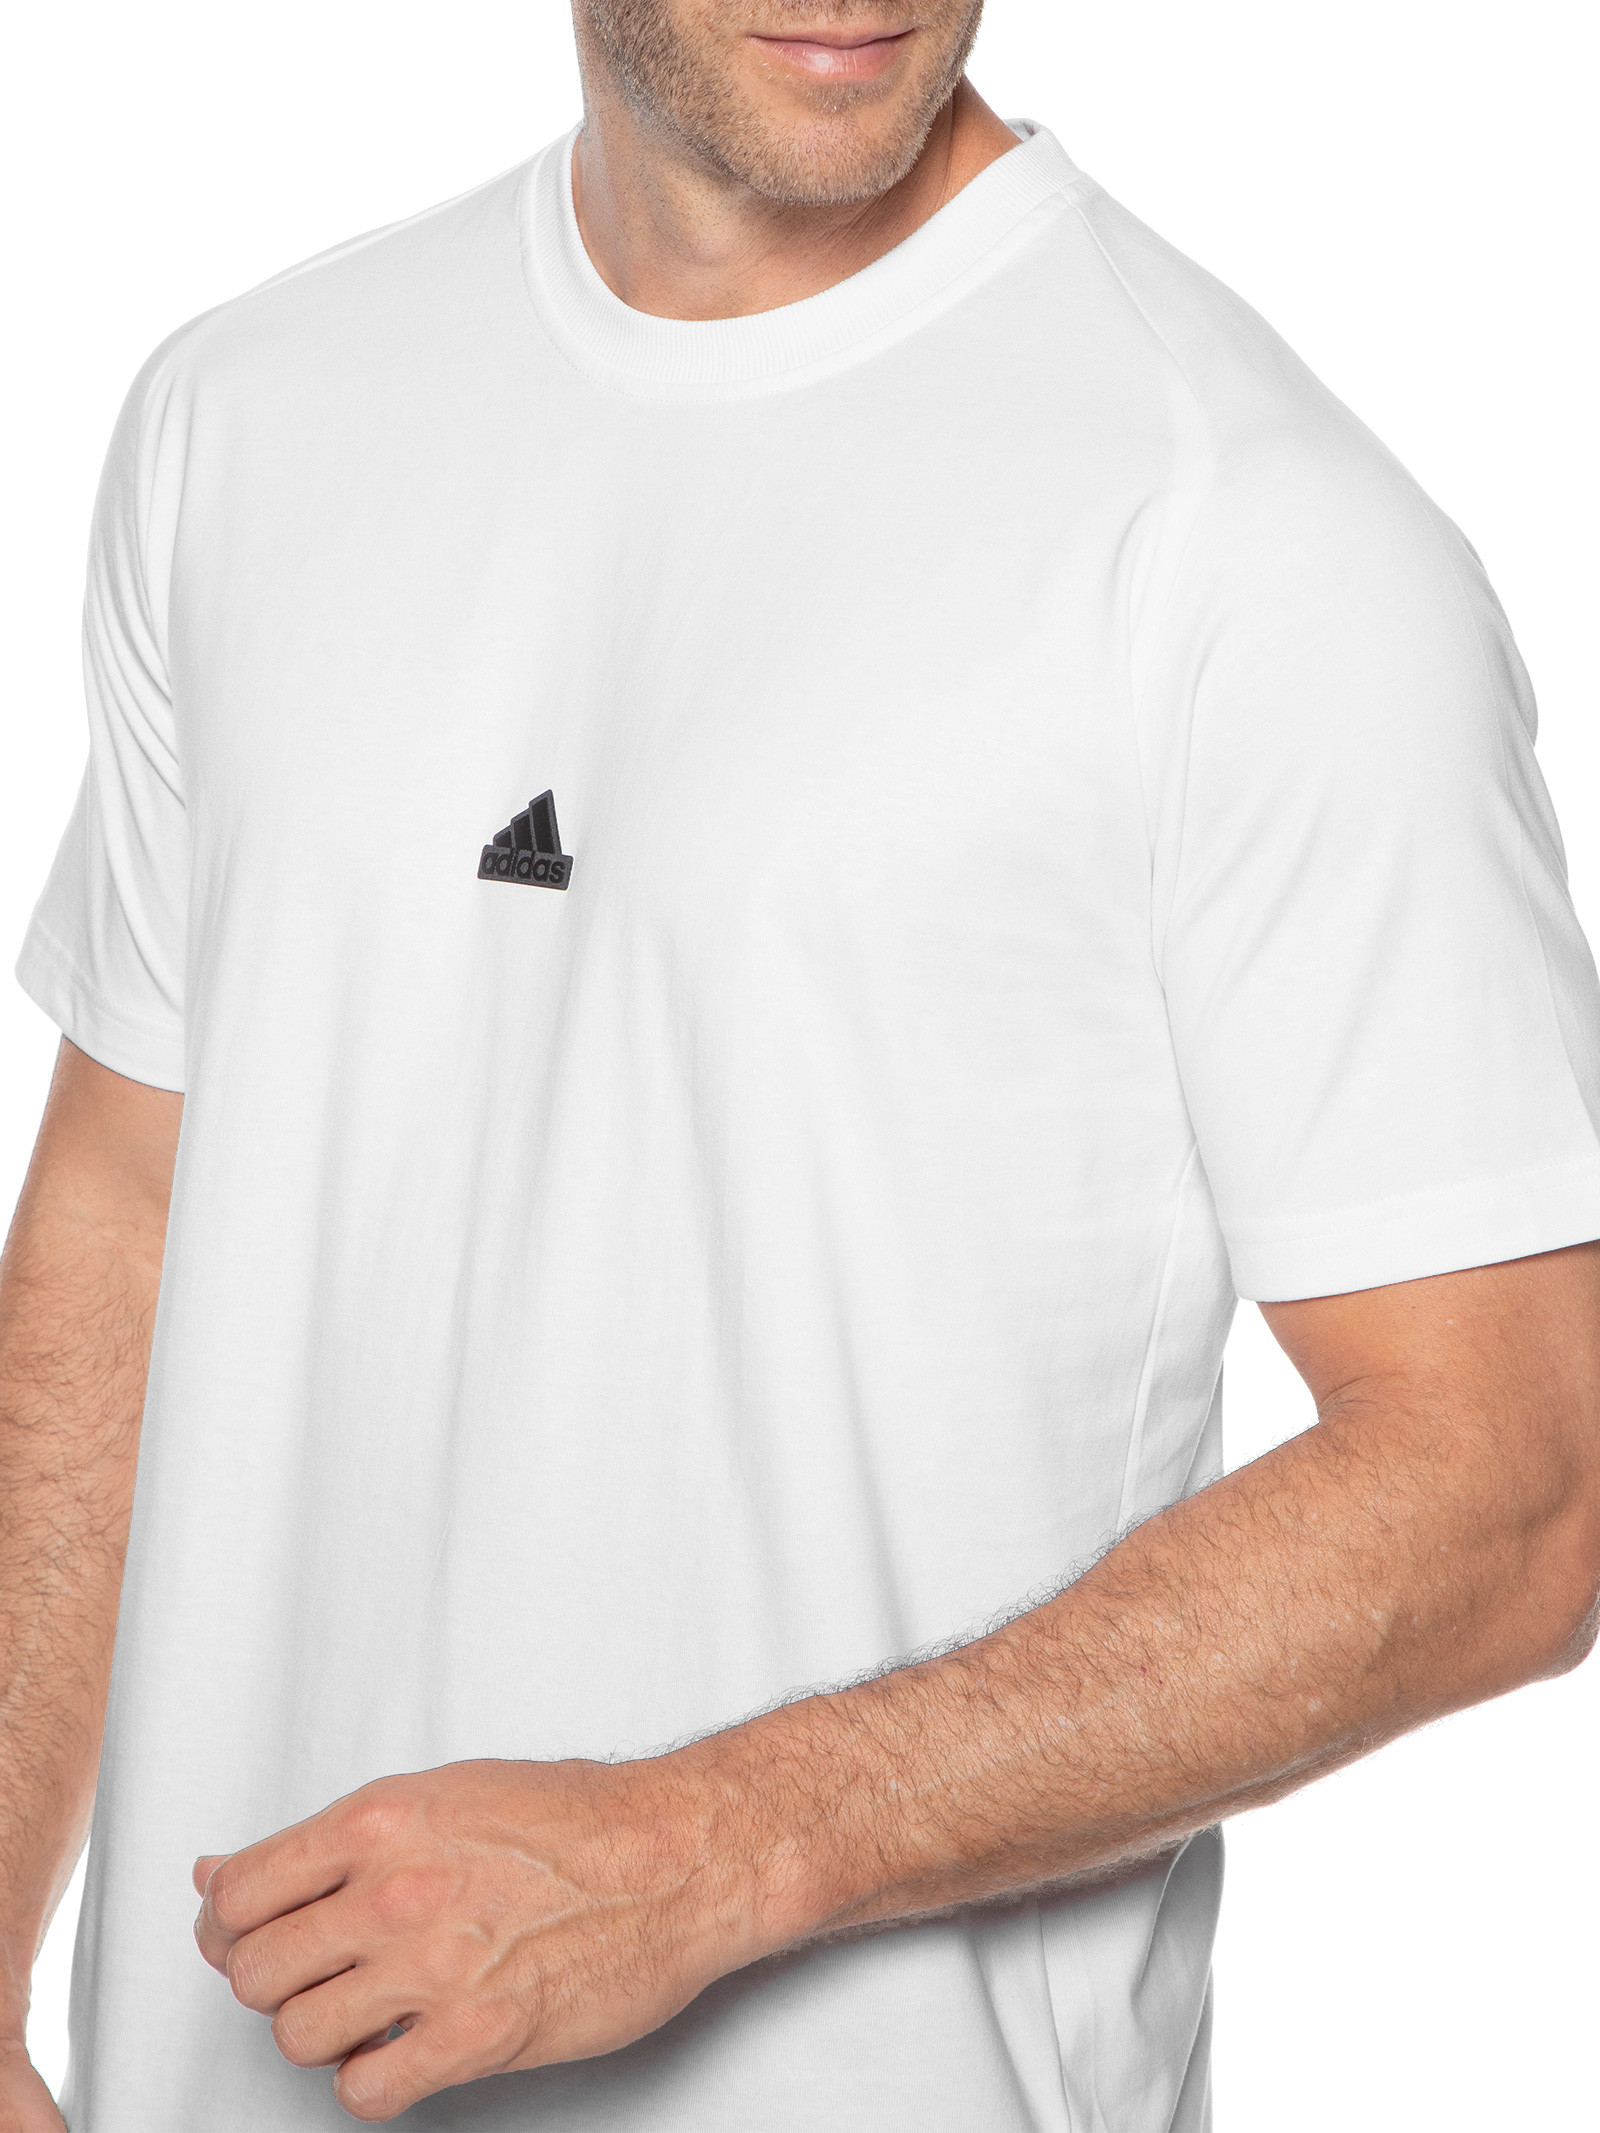 Camiseta John John Stripes Branca - Compre Agora